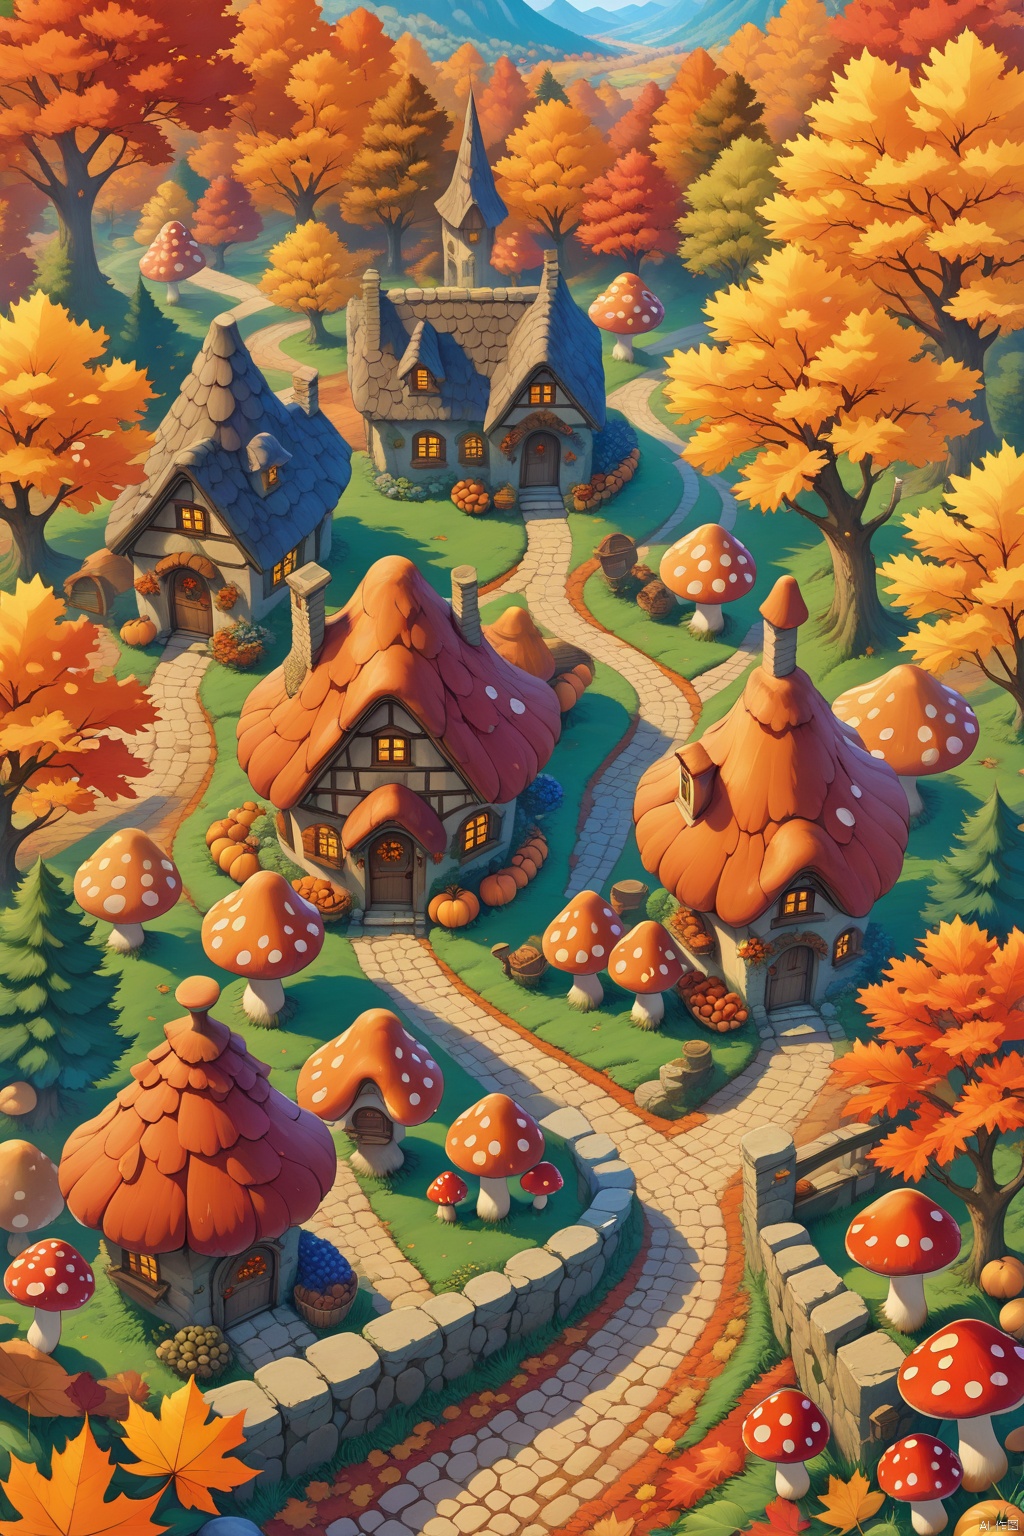  Mushroom houses, trees, roads, HD, masterpieces, best quality, autumn, harvest fruit,